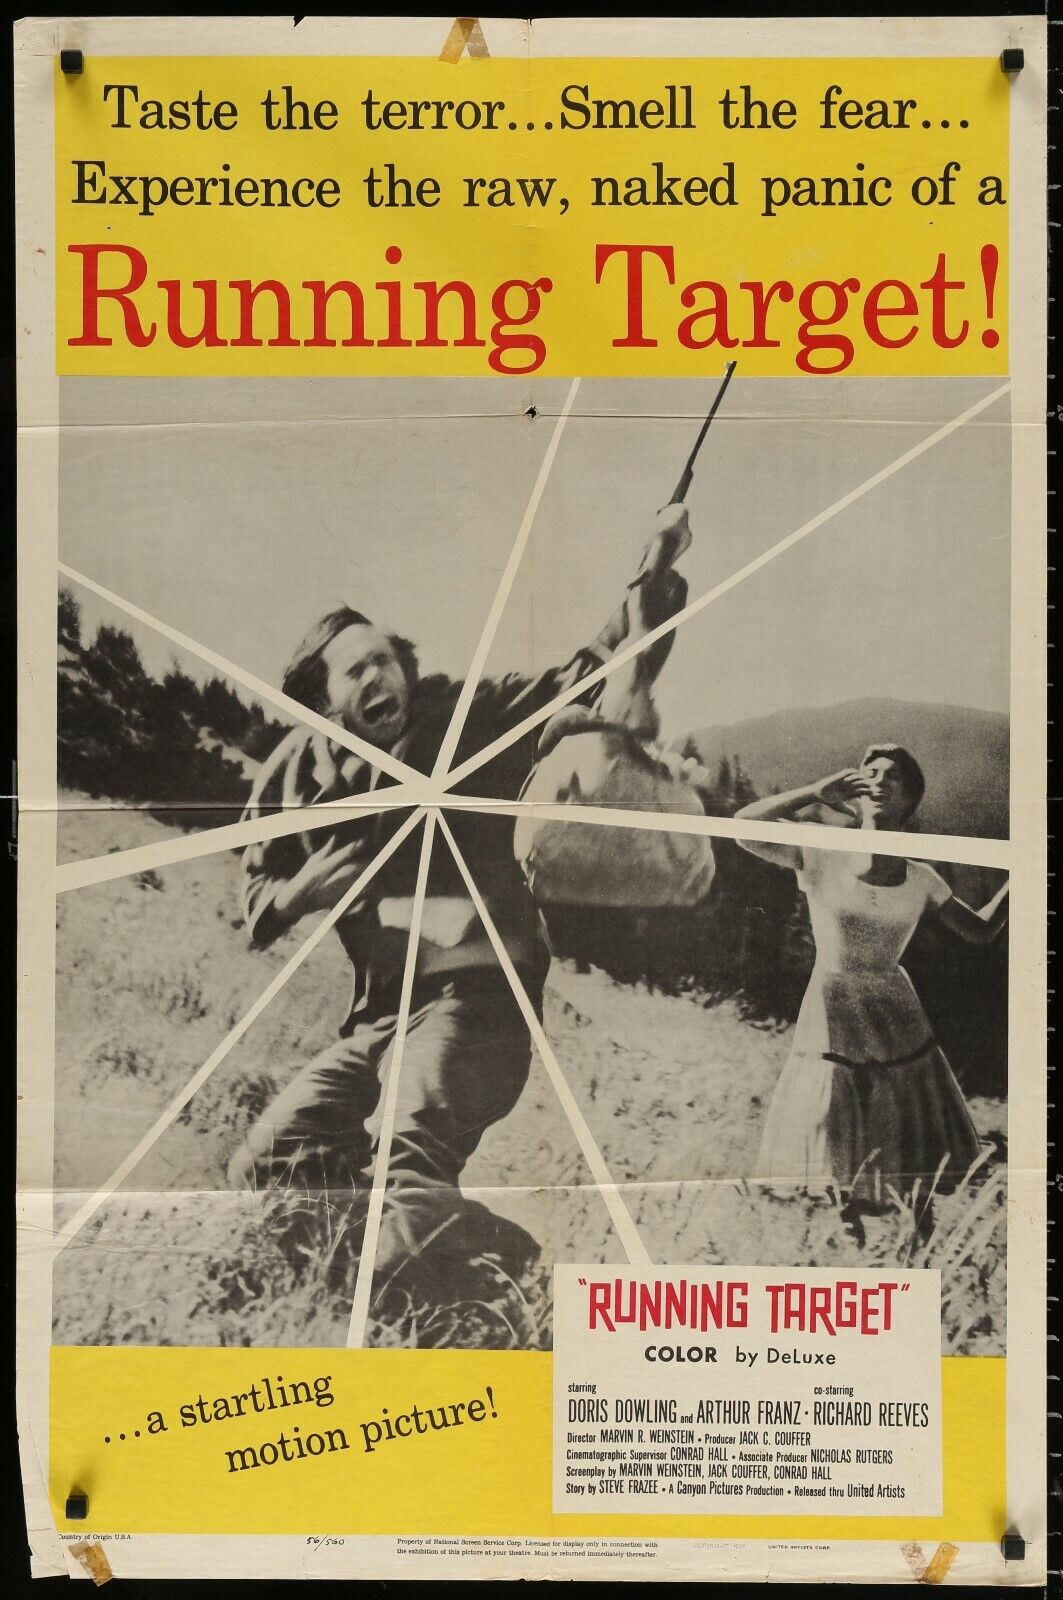 RUNNING TARGET Doris Dowling ORIGINAL 1956 1 Sheet Movie Poster 27 x 41